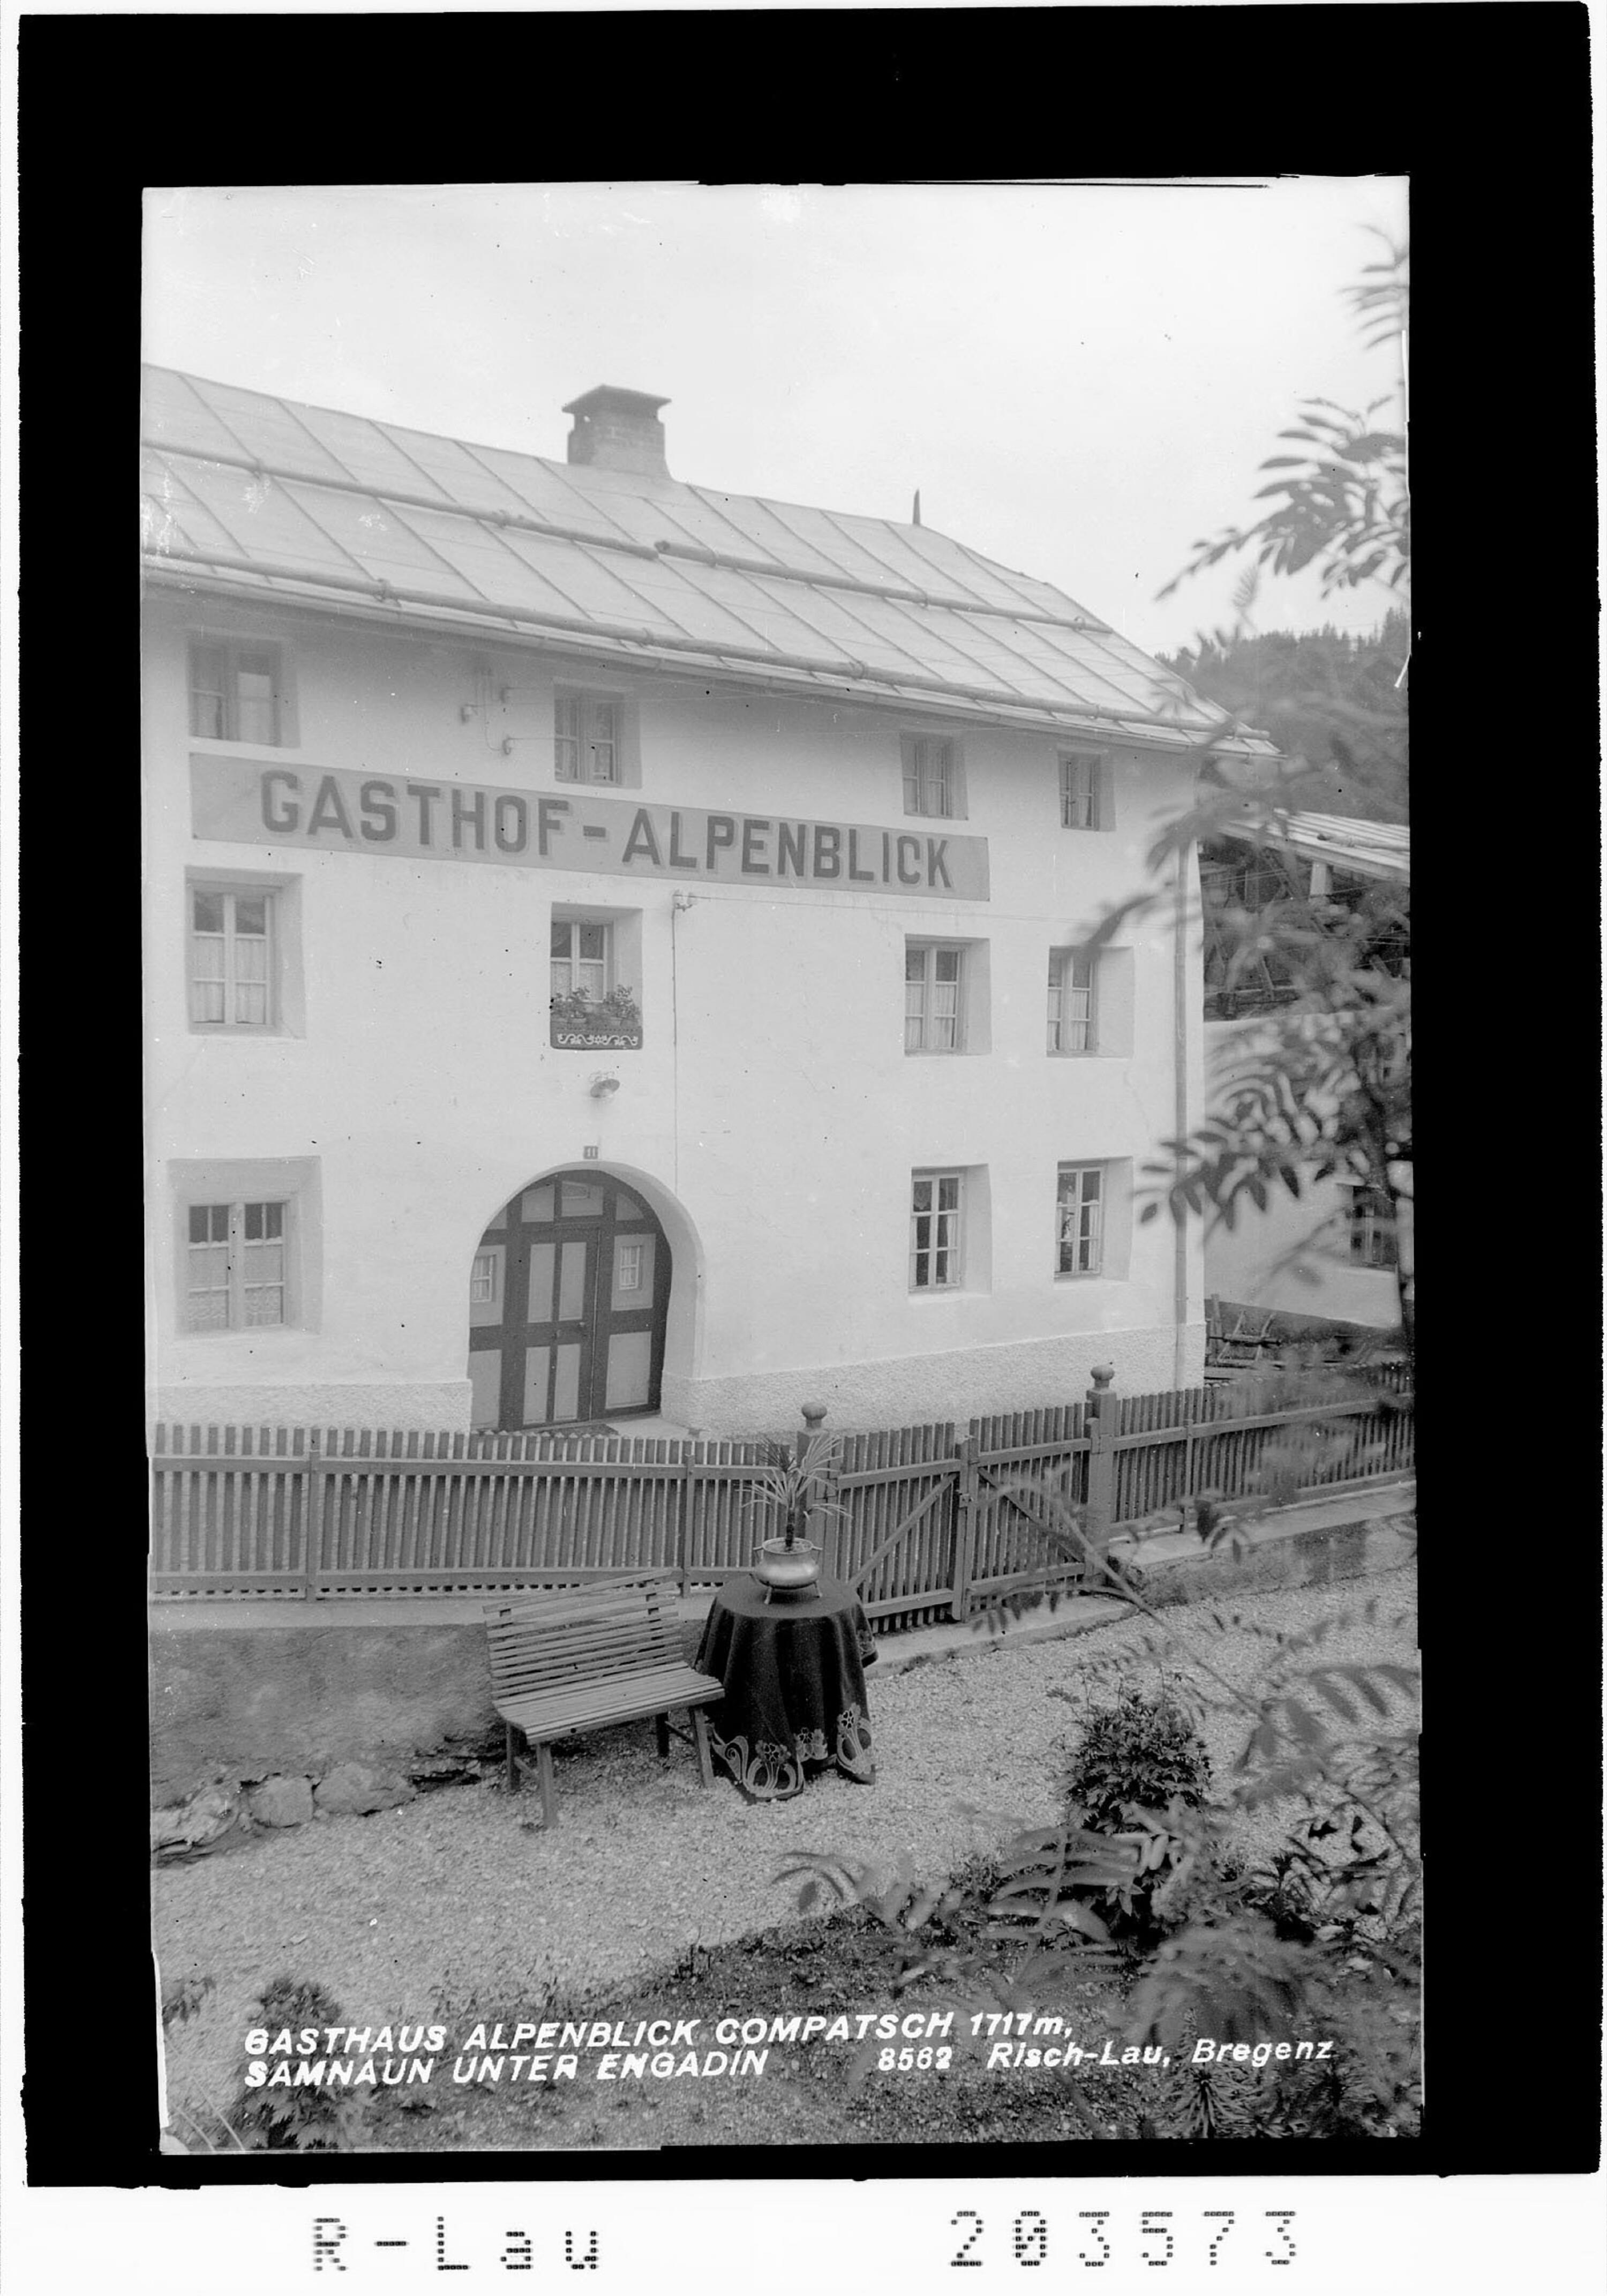 Gasthaus Alpenblick Compatsch 1717 m / Samnaun Unterengadin></div>


    <hr>
    <div class=